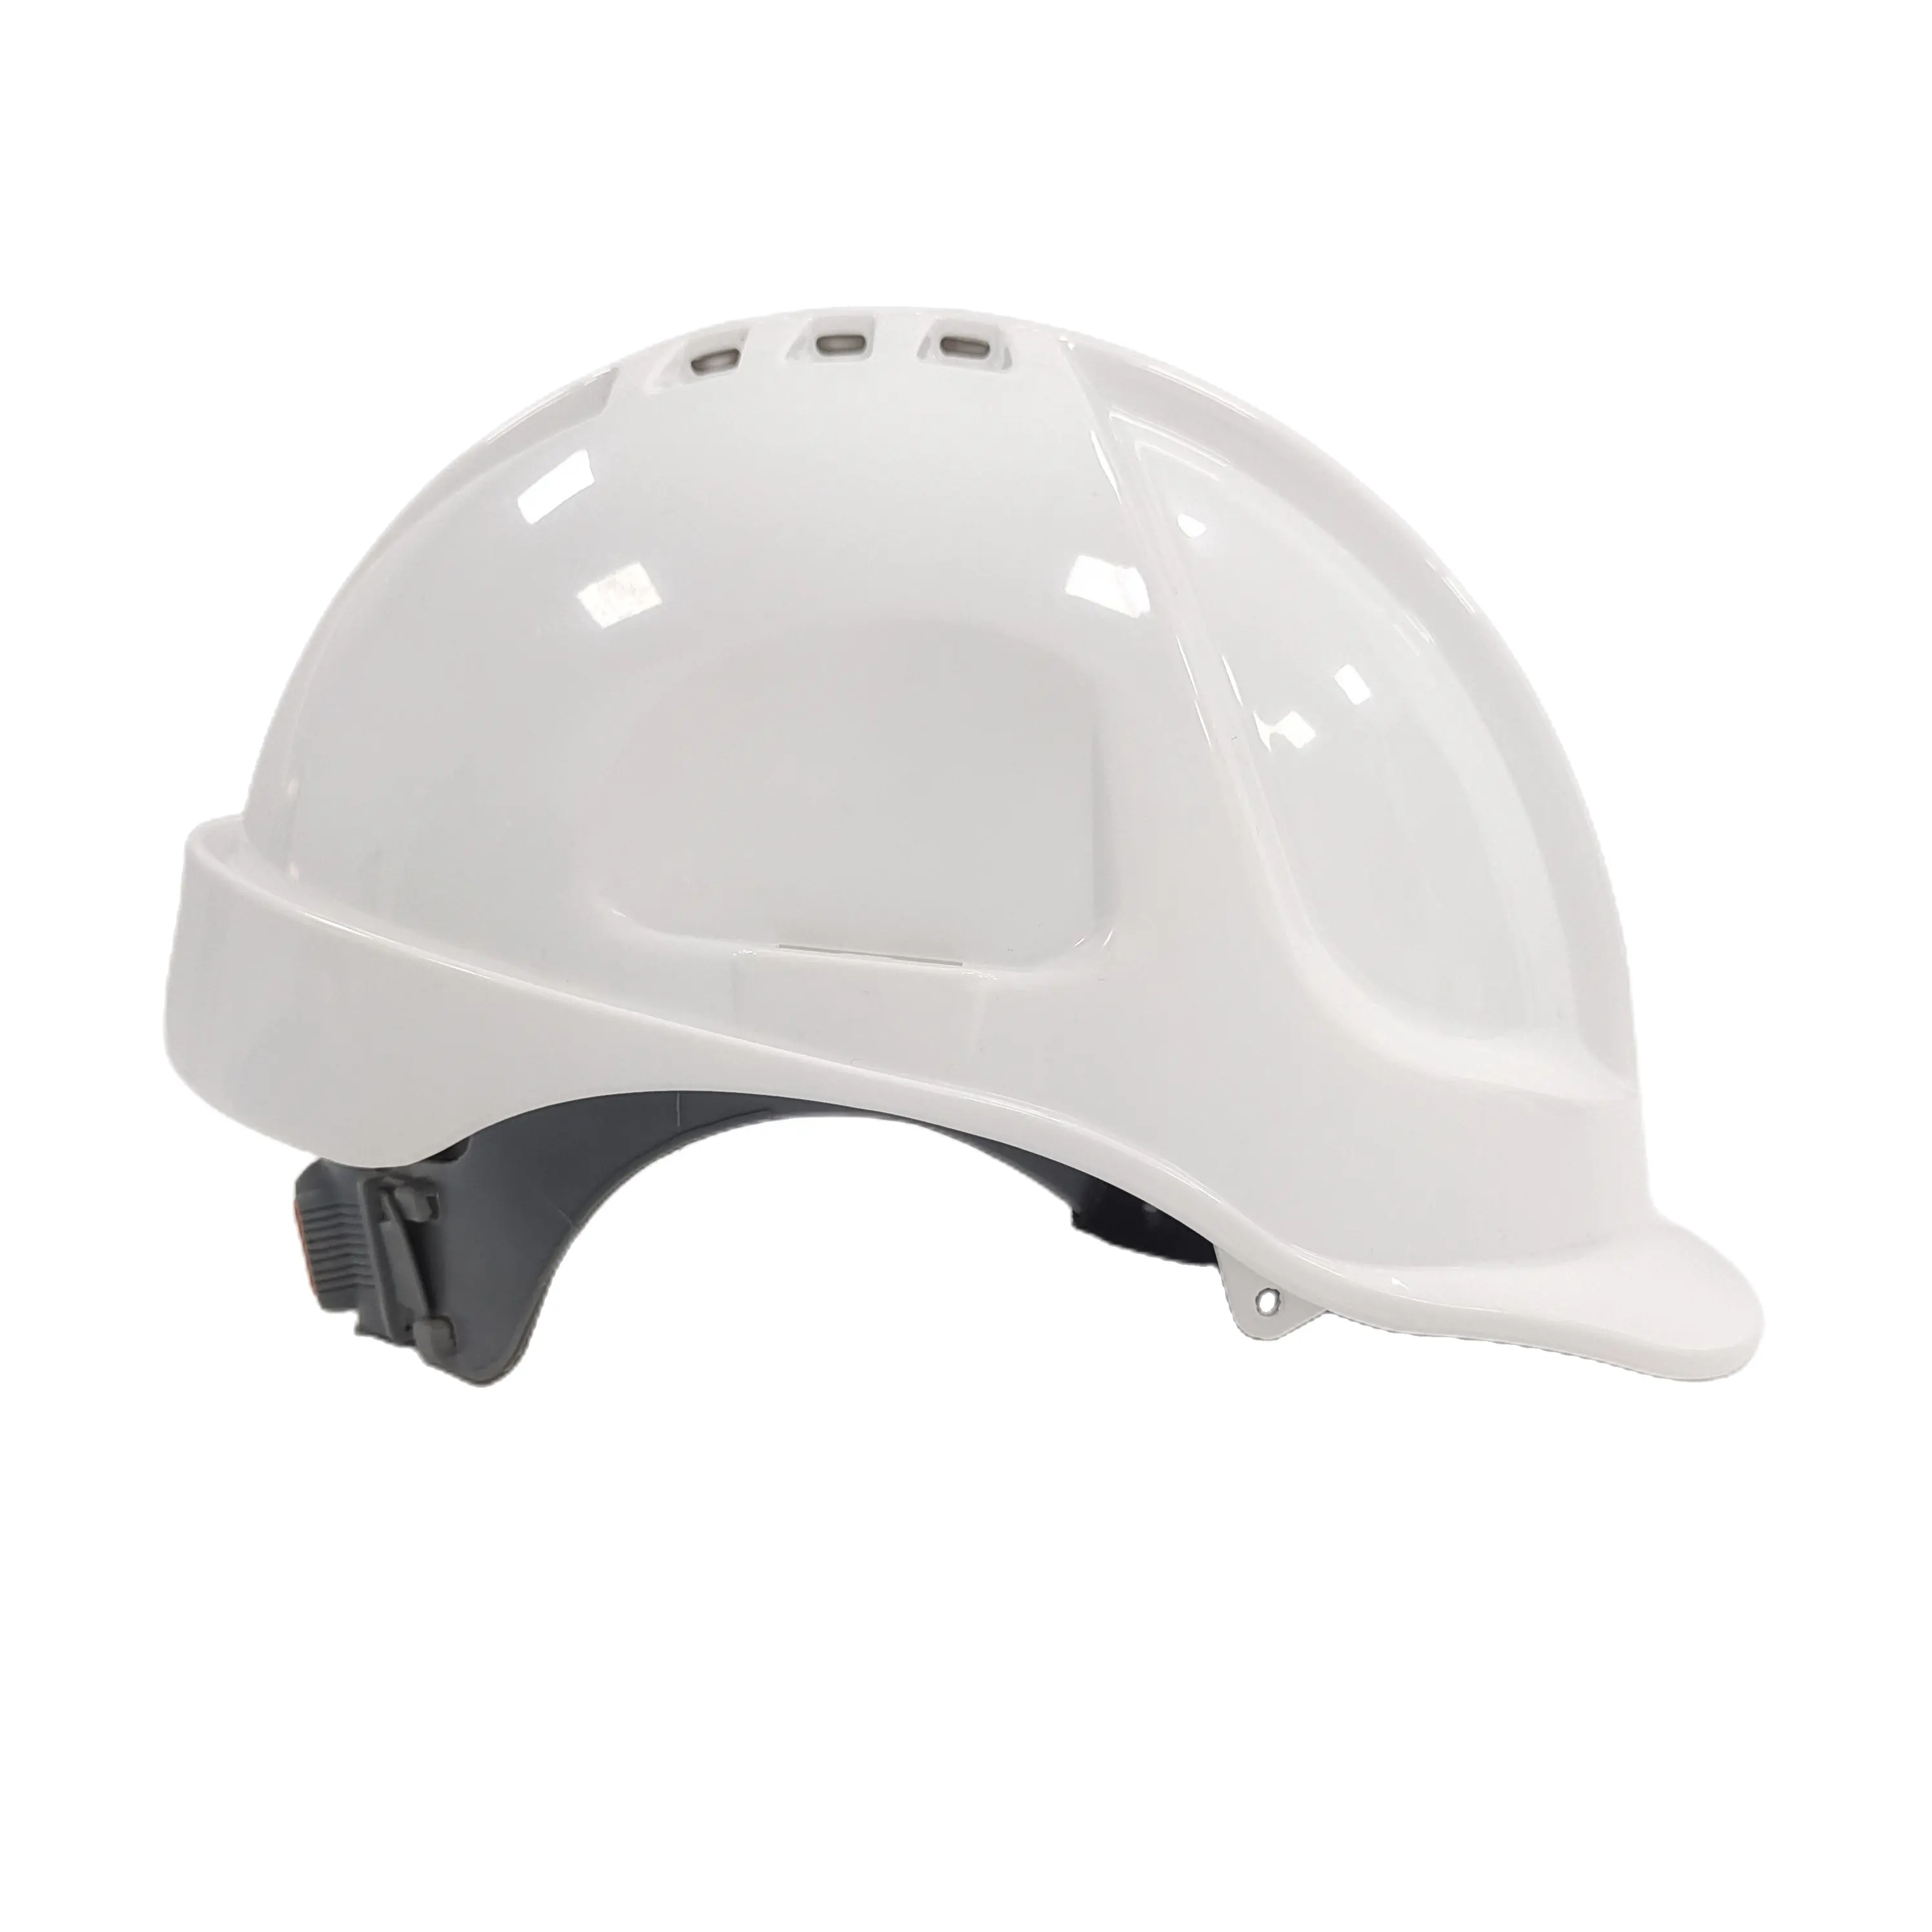 Deltaplus-casco de seguridad para construcción, nuevo diseño ansi, fibra de carbono, hdpe, refuerzo duro